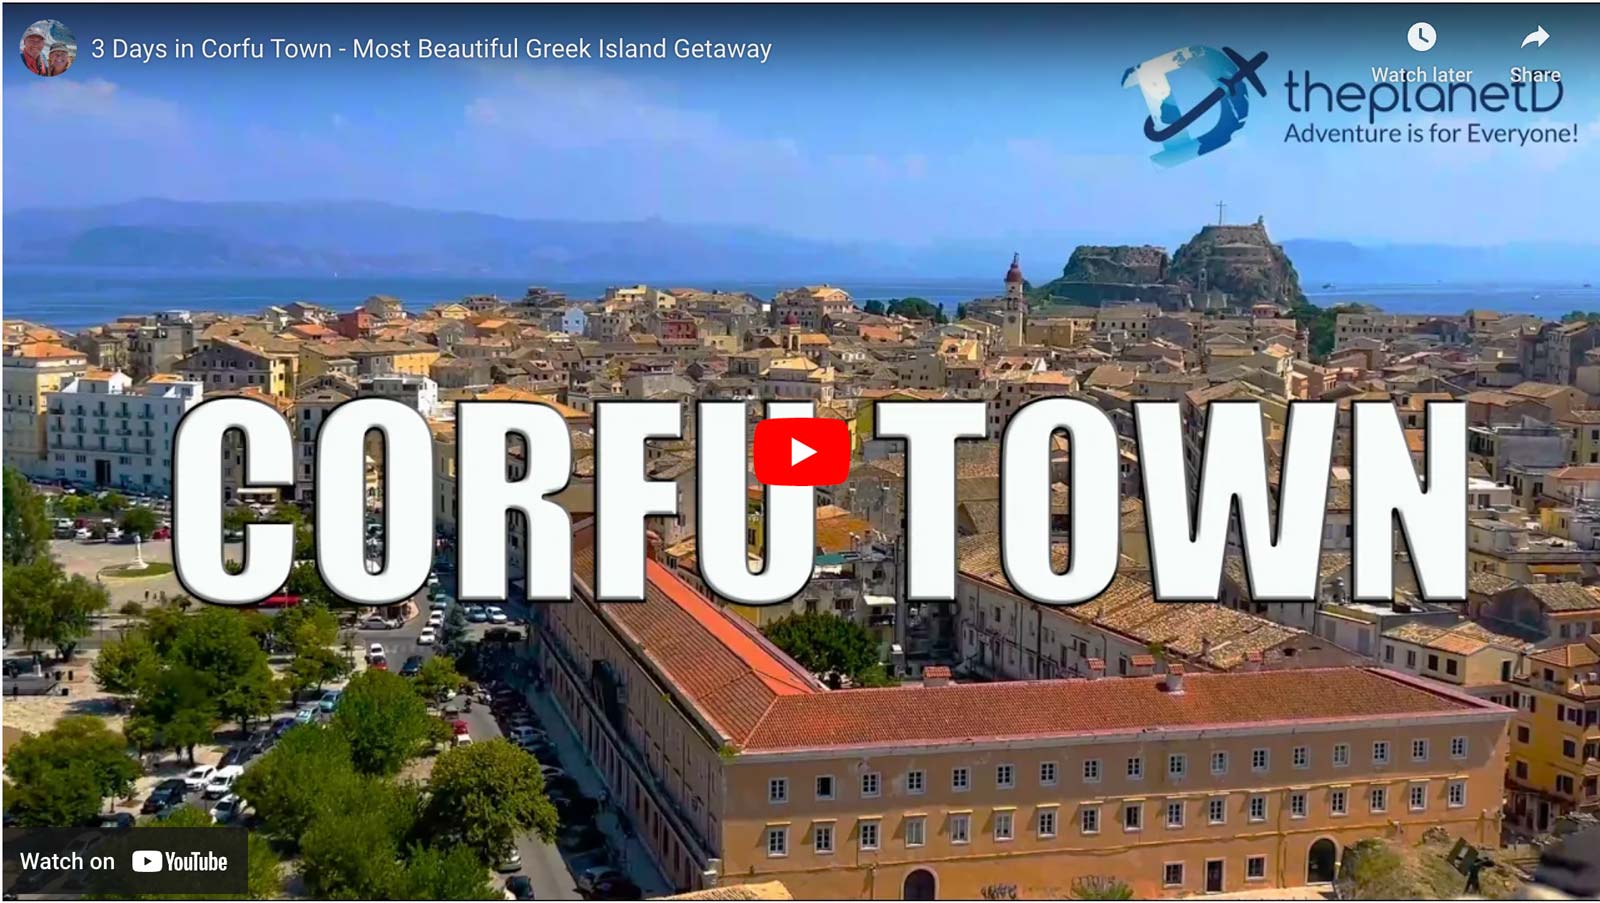 vídeo de coisas para fazer na cidade de Corfu